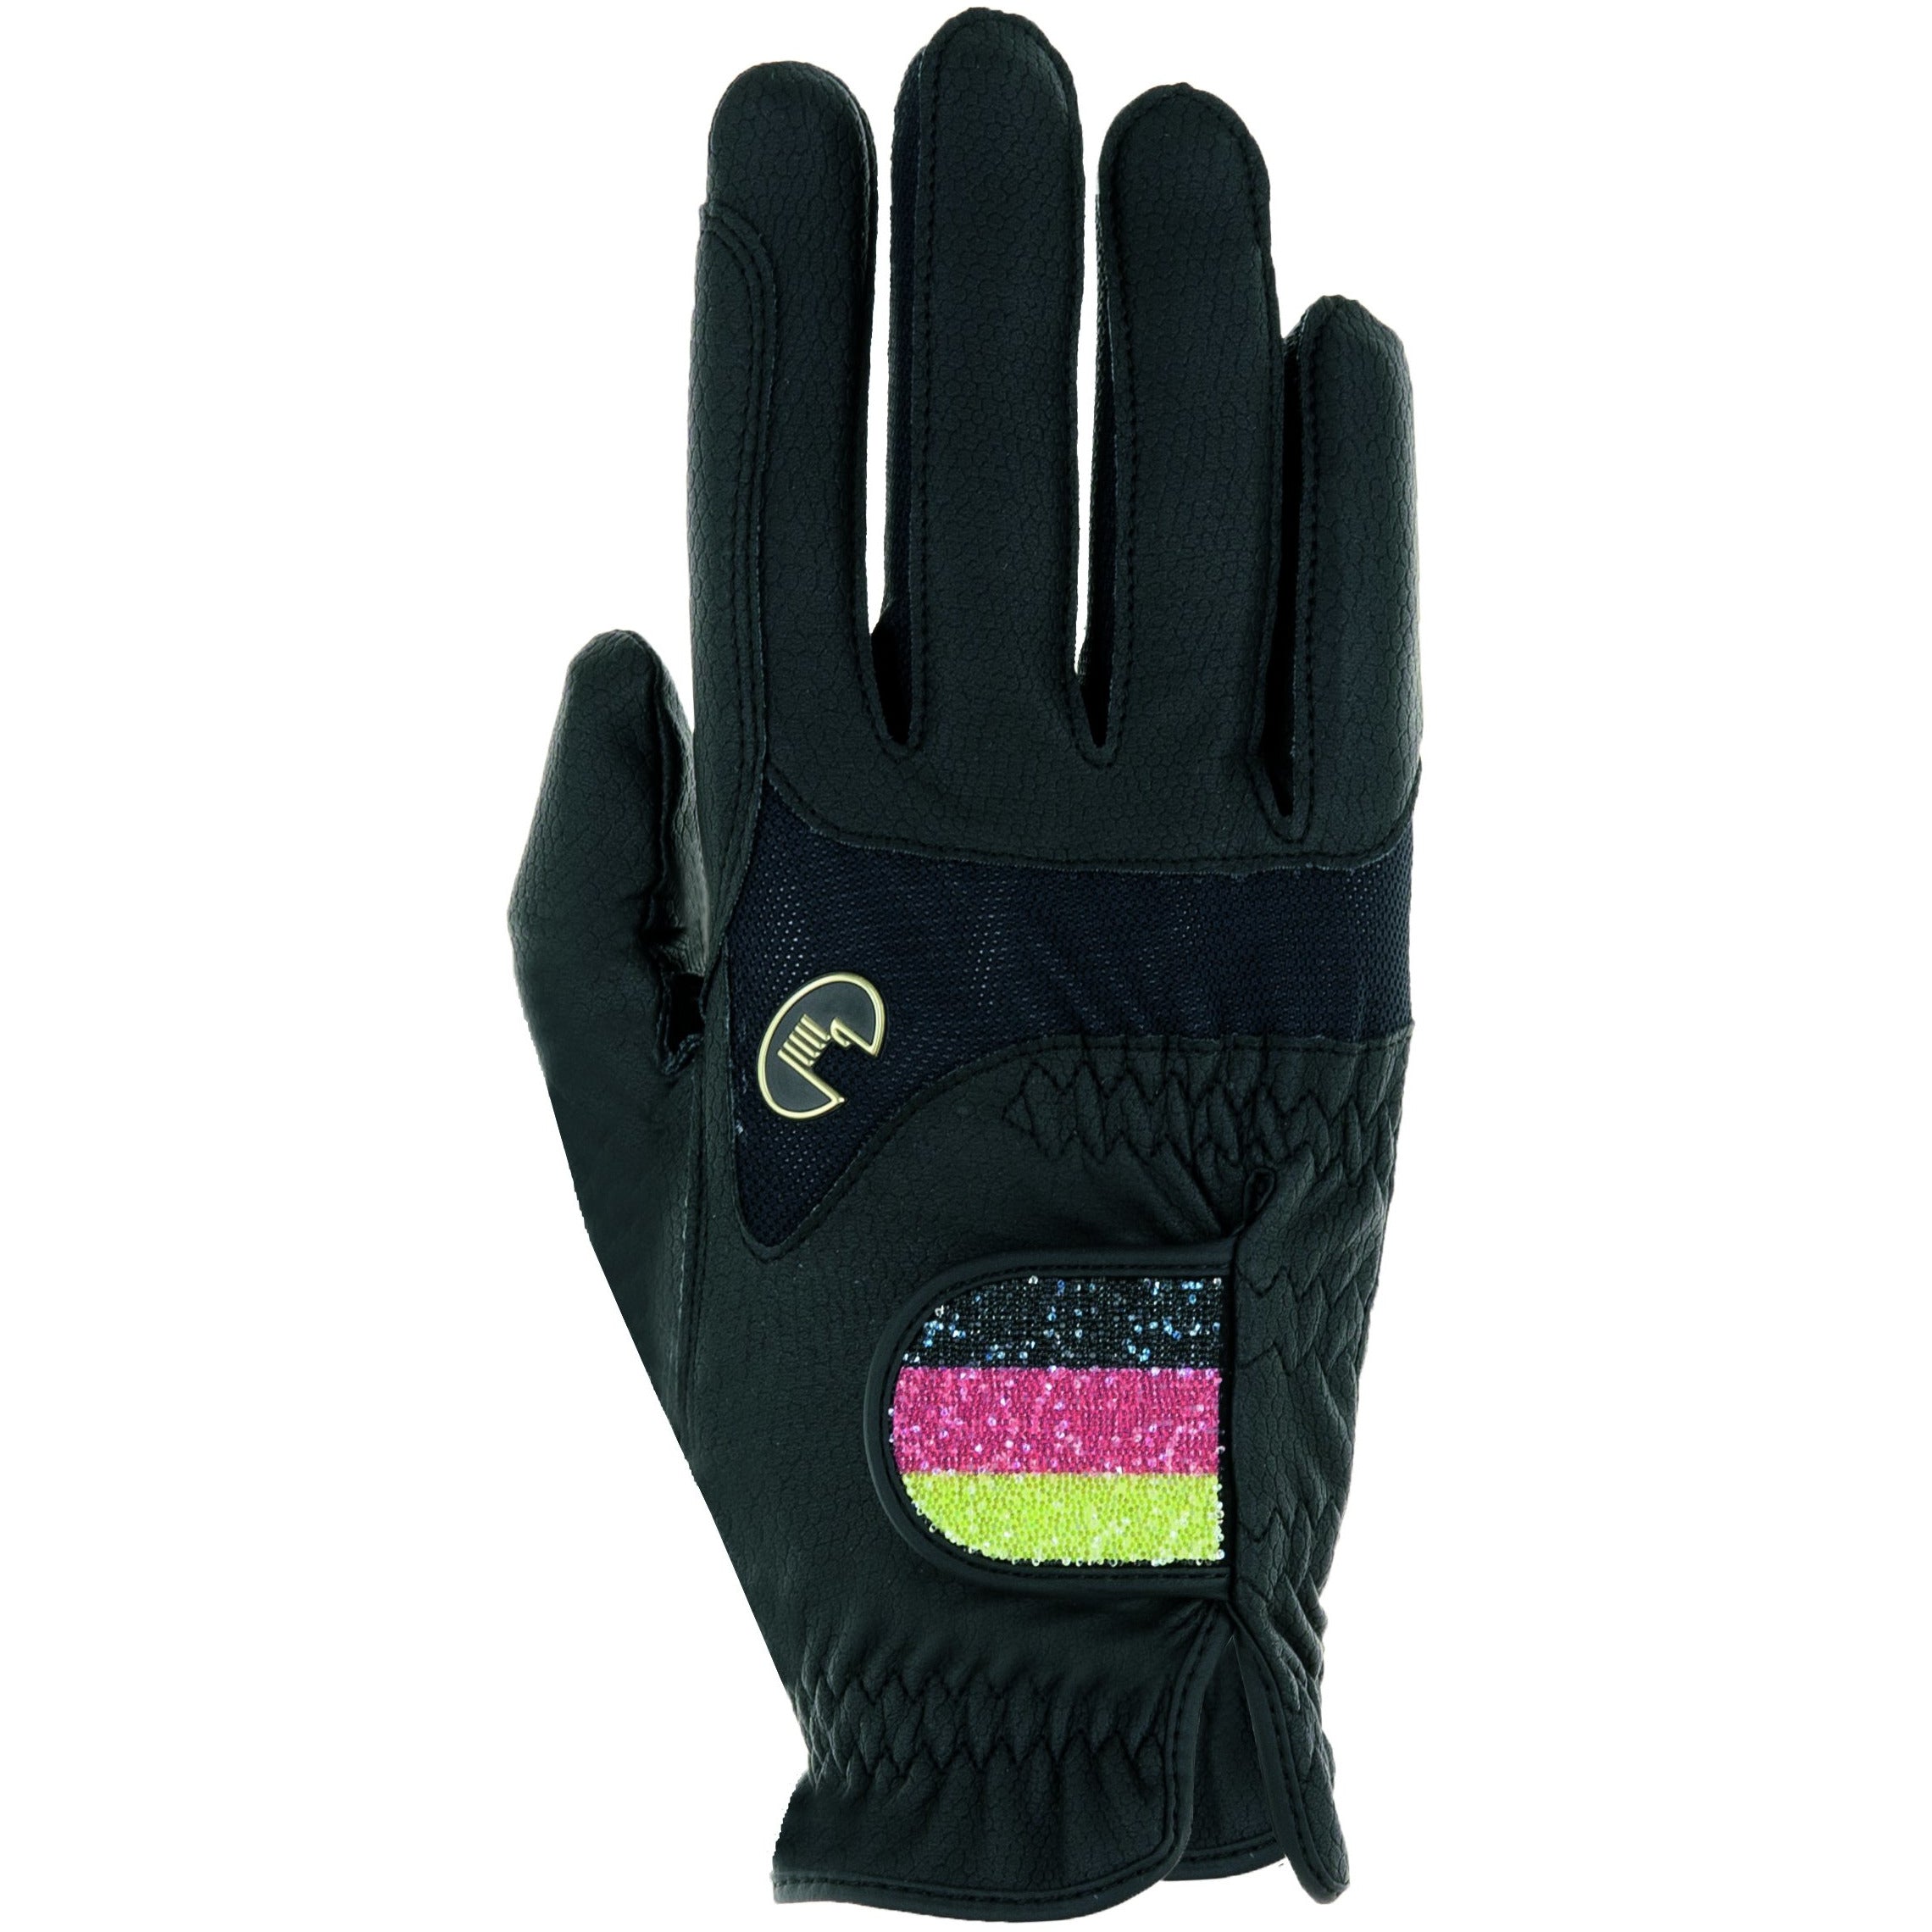 Roeckl Maryland Glove - German